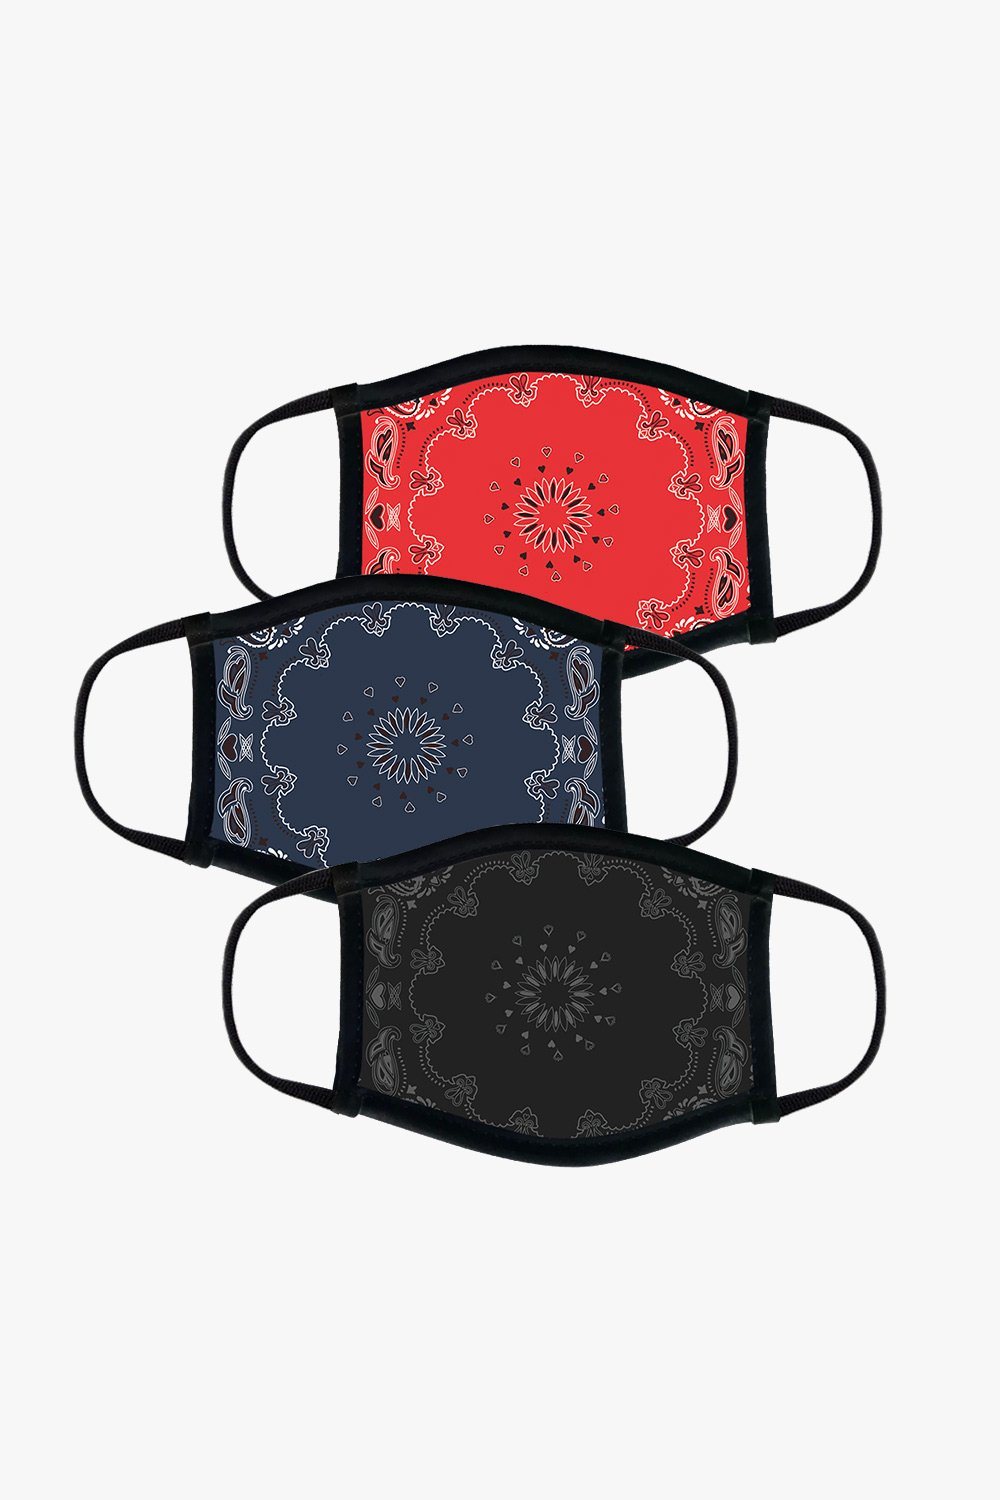 Reusable Fabric Face Mask - Paisley Bandana Jack + Mulligan Assorted (Red, Navy, Black) 3 Pack 